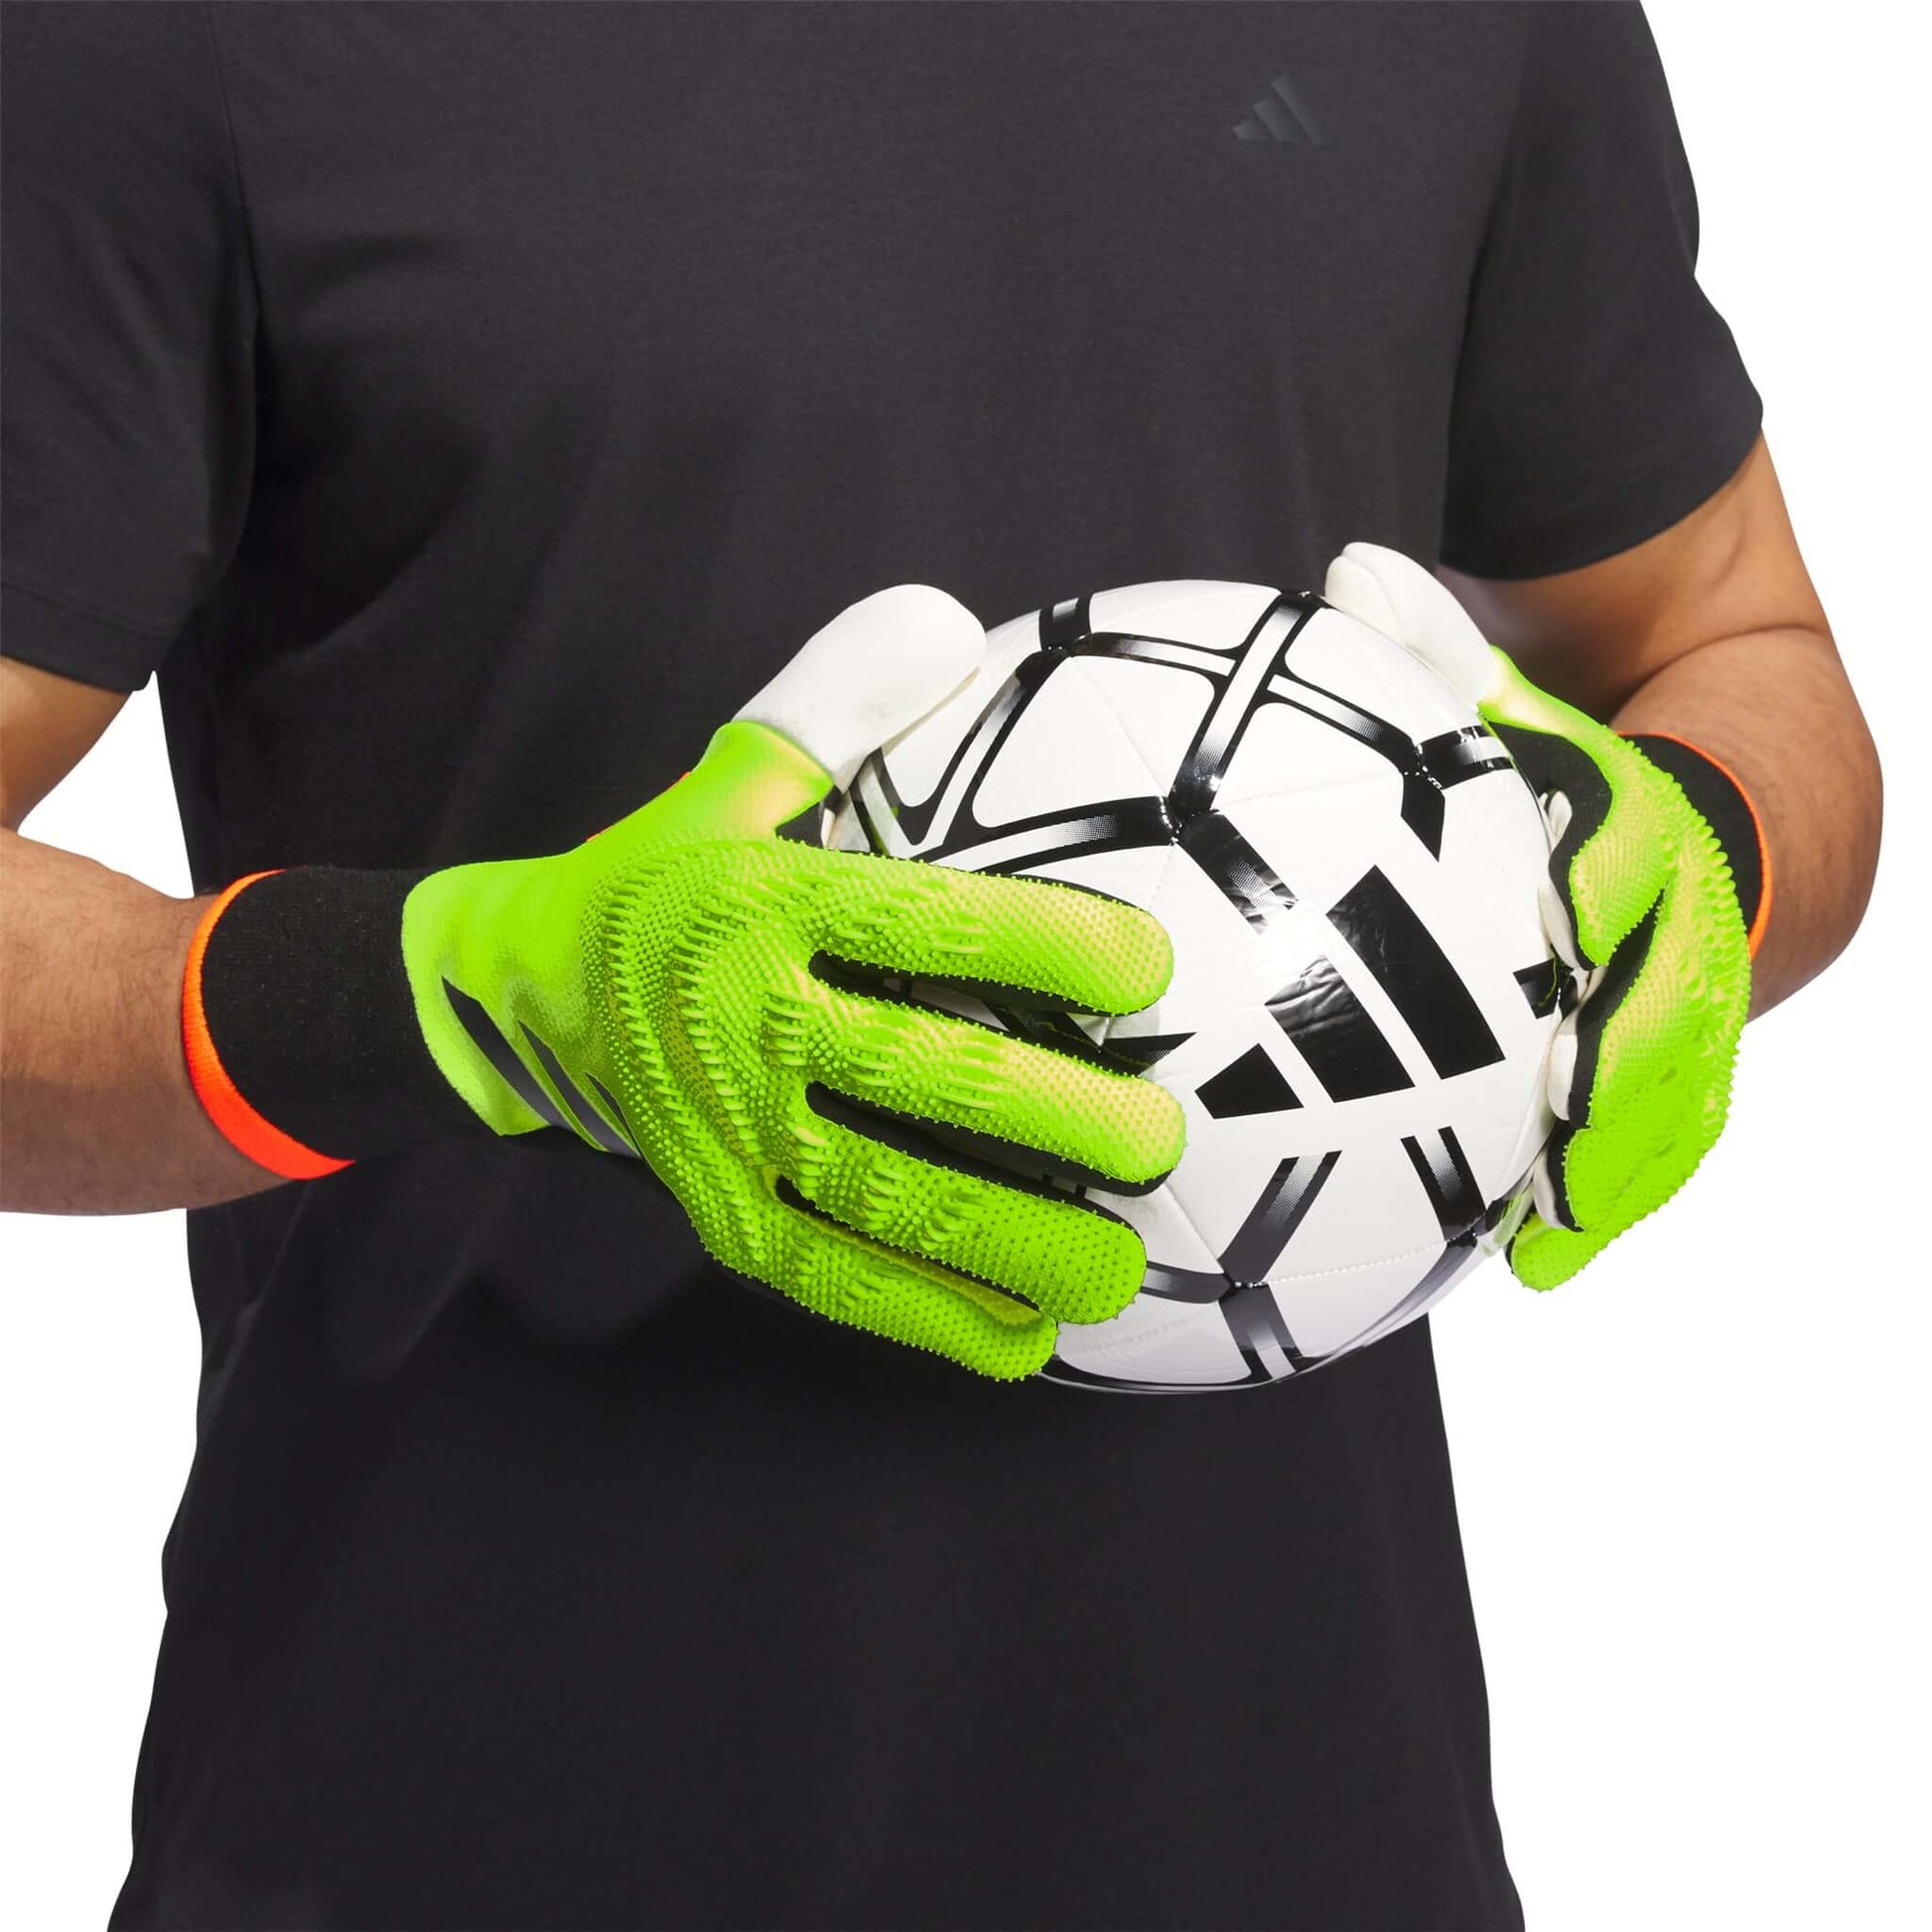 Predator Pro Promo Goalkeeper Gloves | EvangelistaSports.com | Canada's Premiere Soccer Store